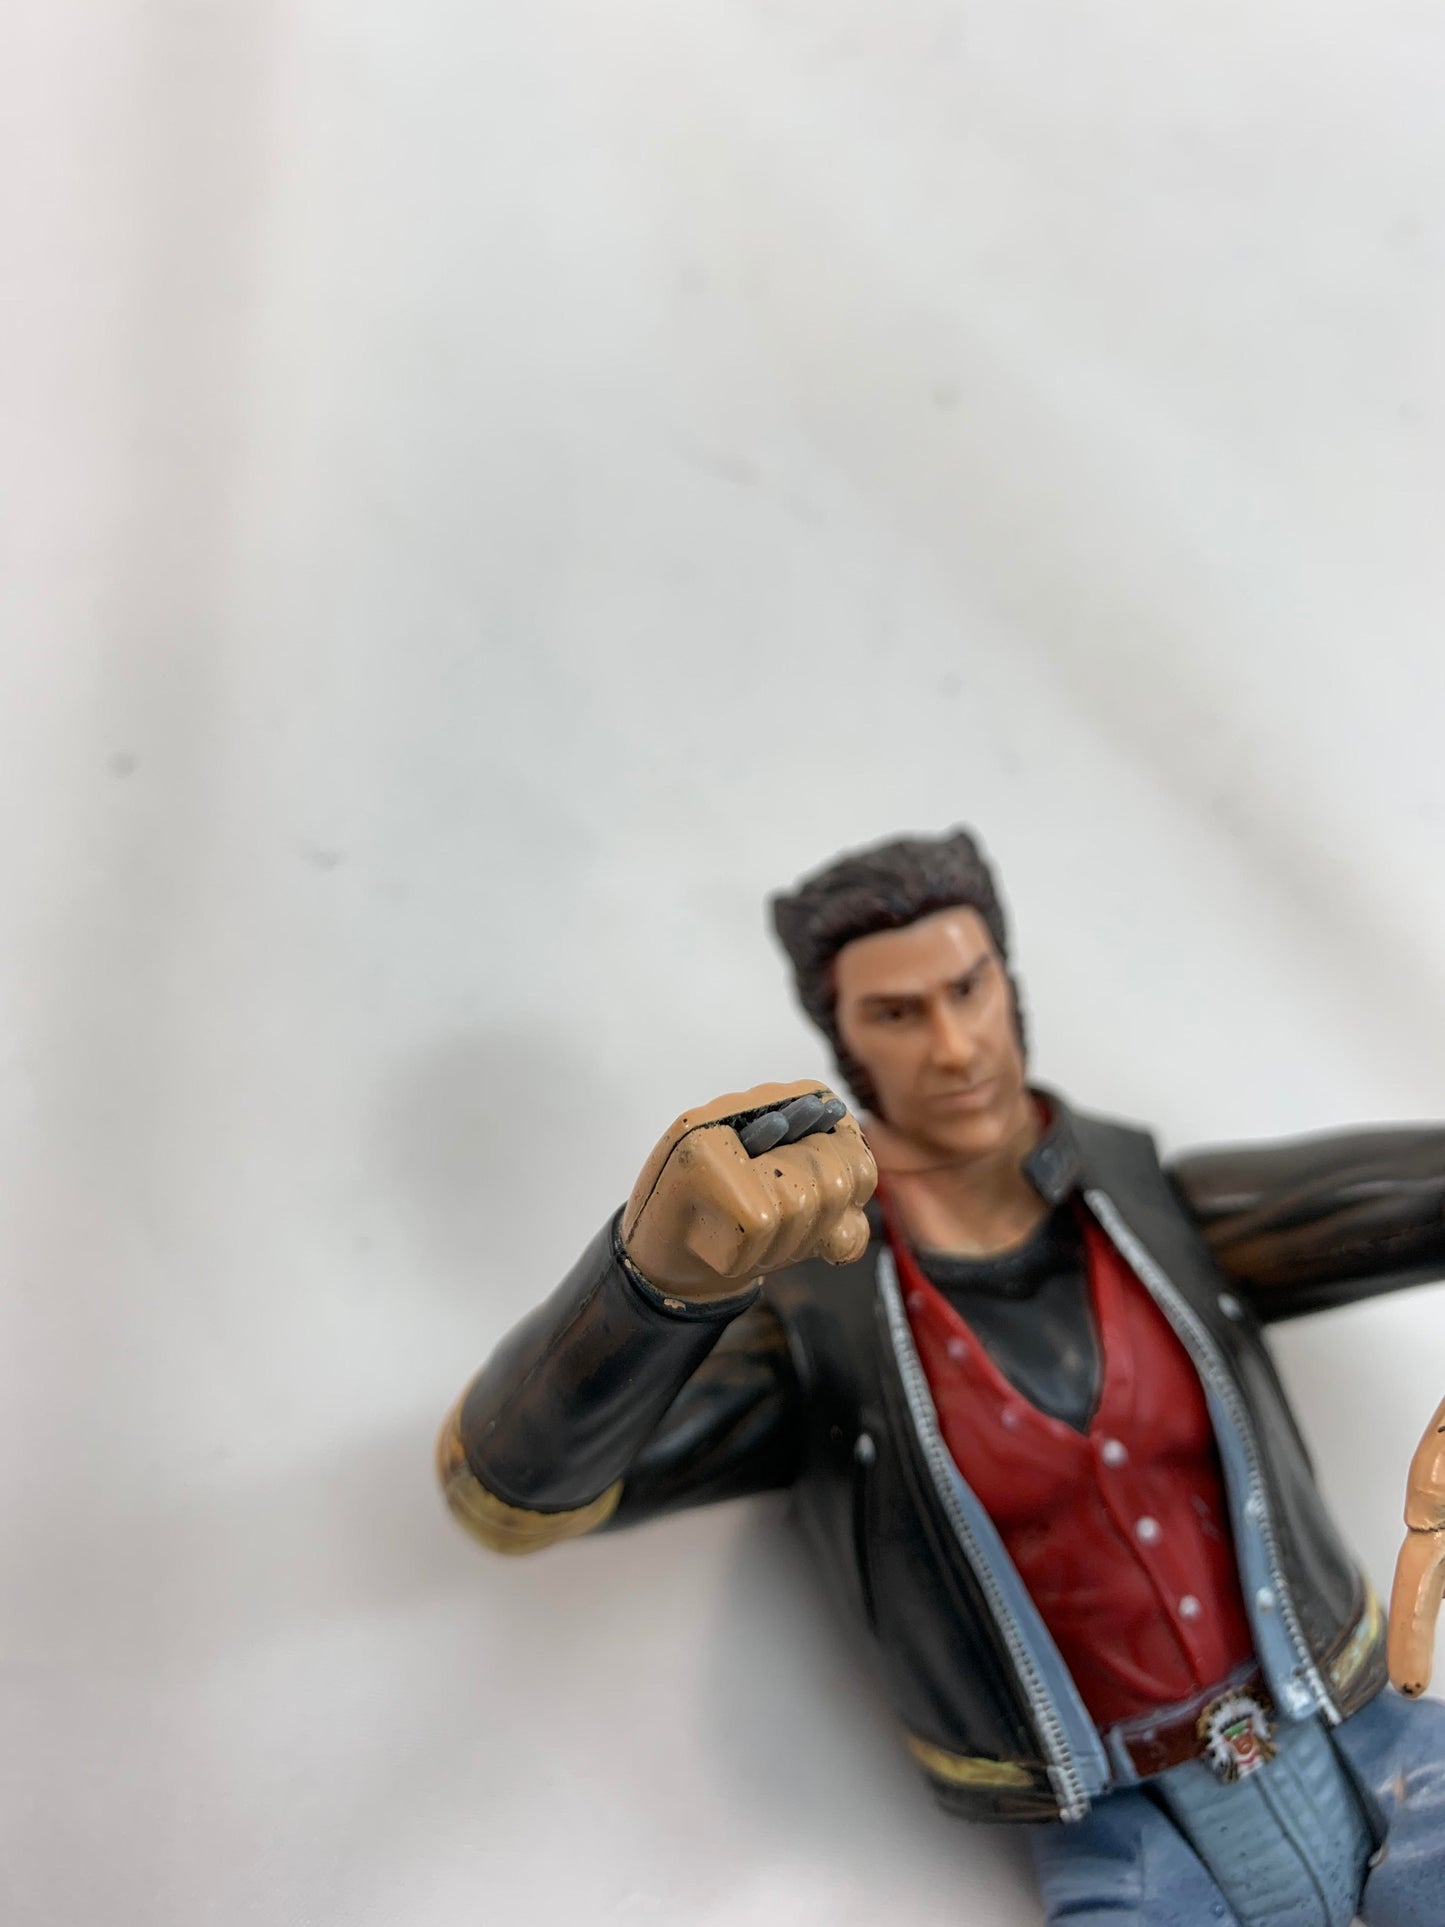 Toy Biz Marvel X-Men The Movie Wolverine “Hugh Jackman As Logan” 2000 - Loose